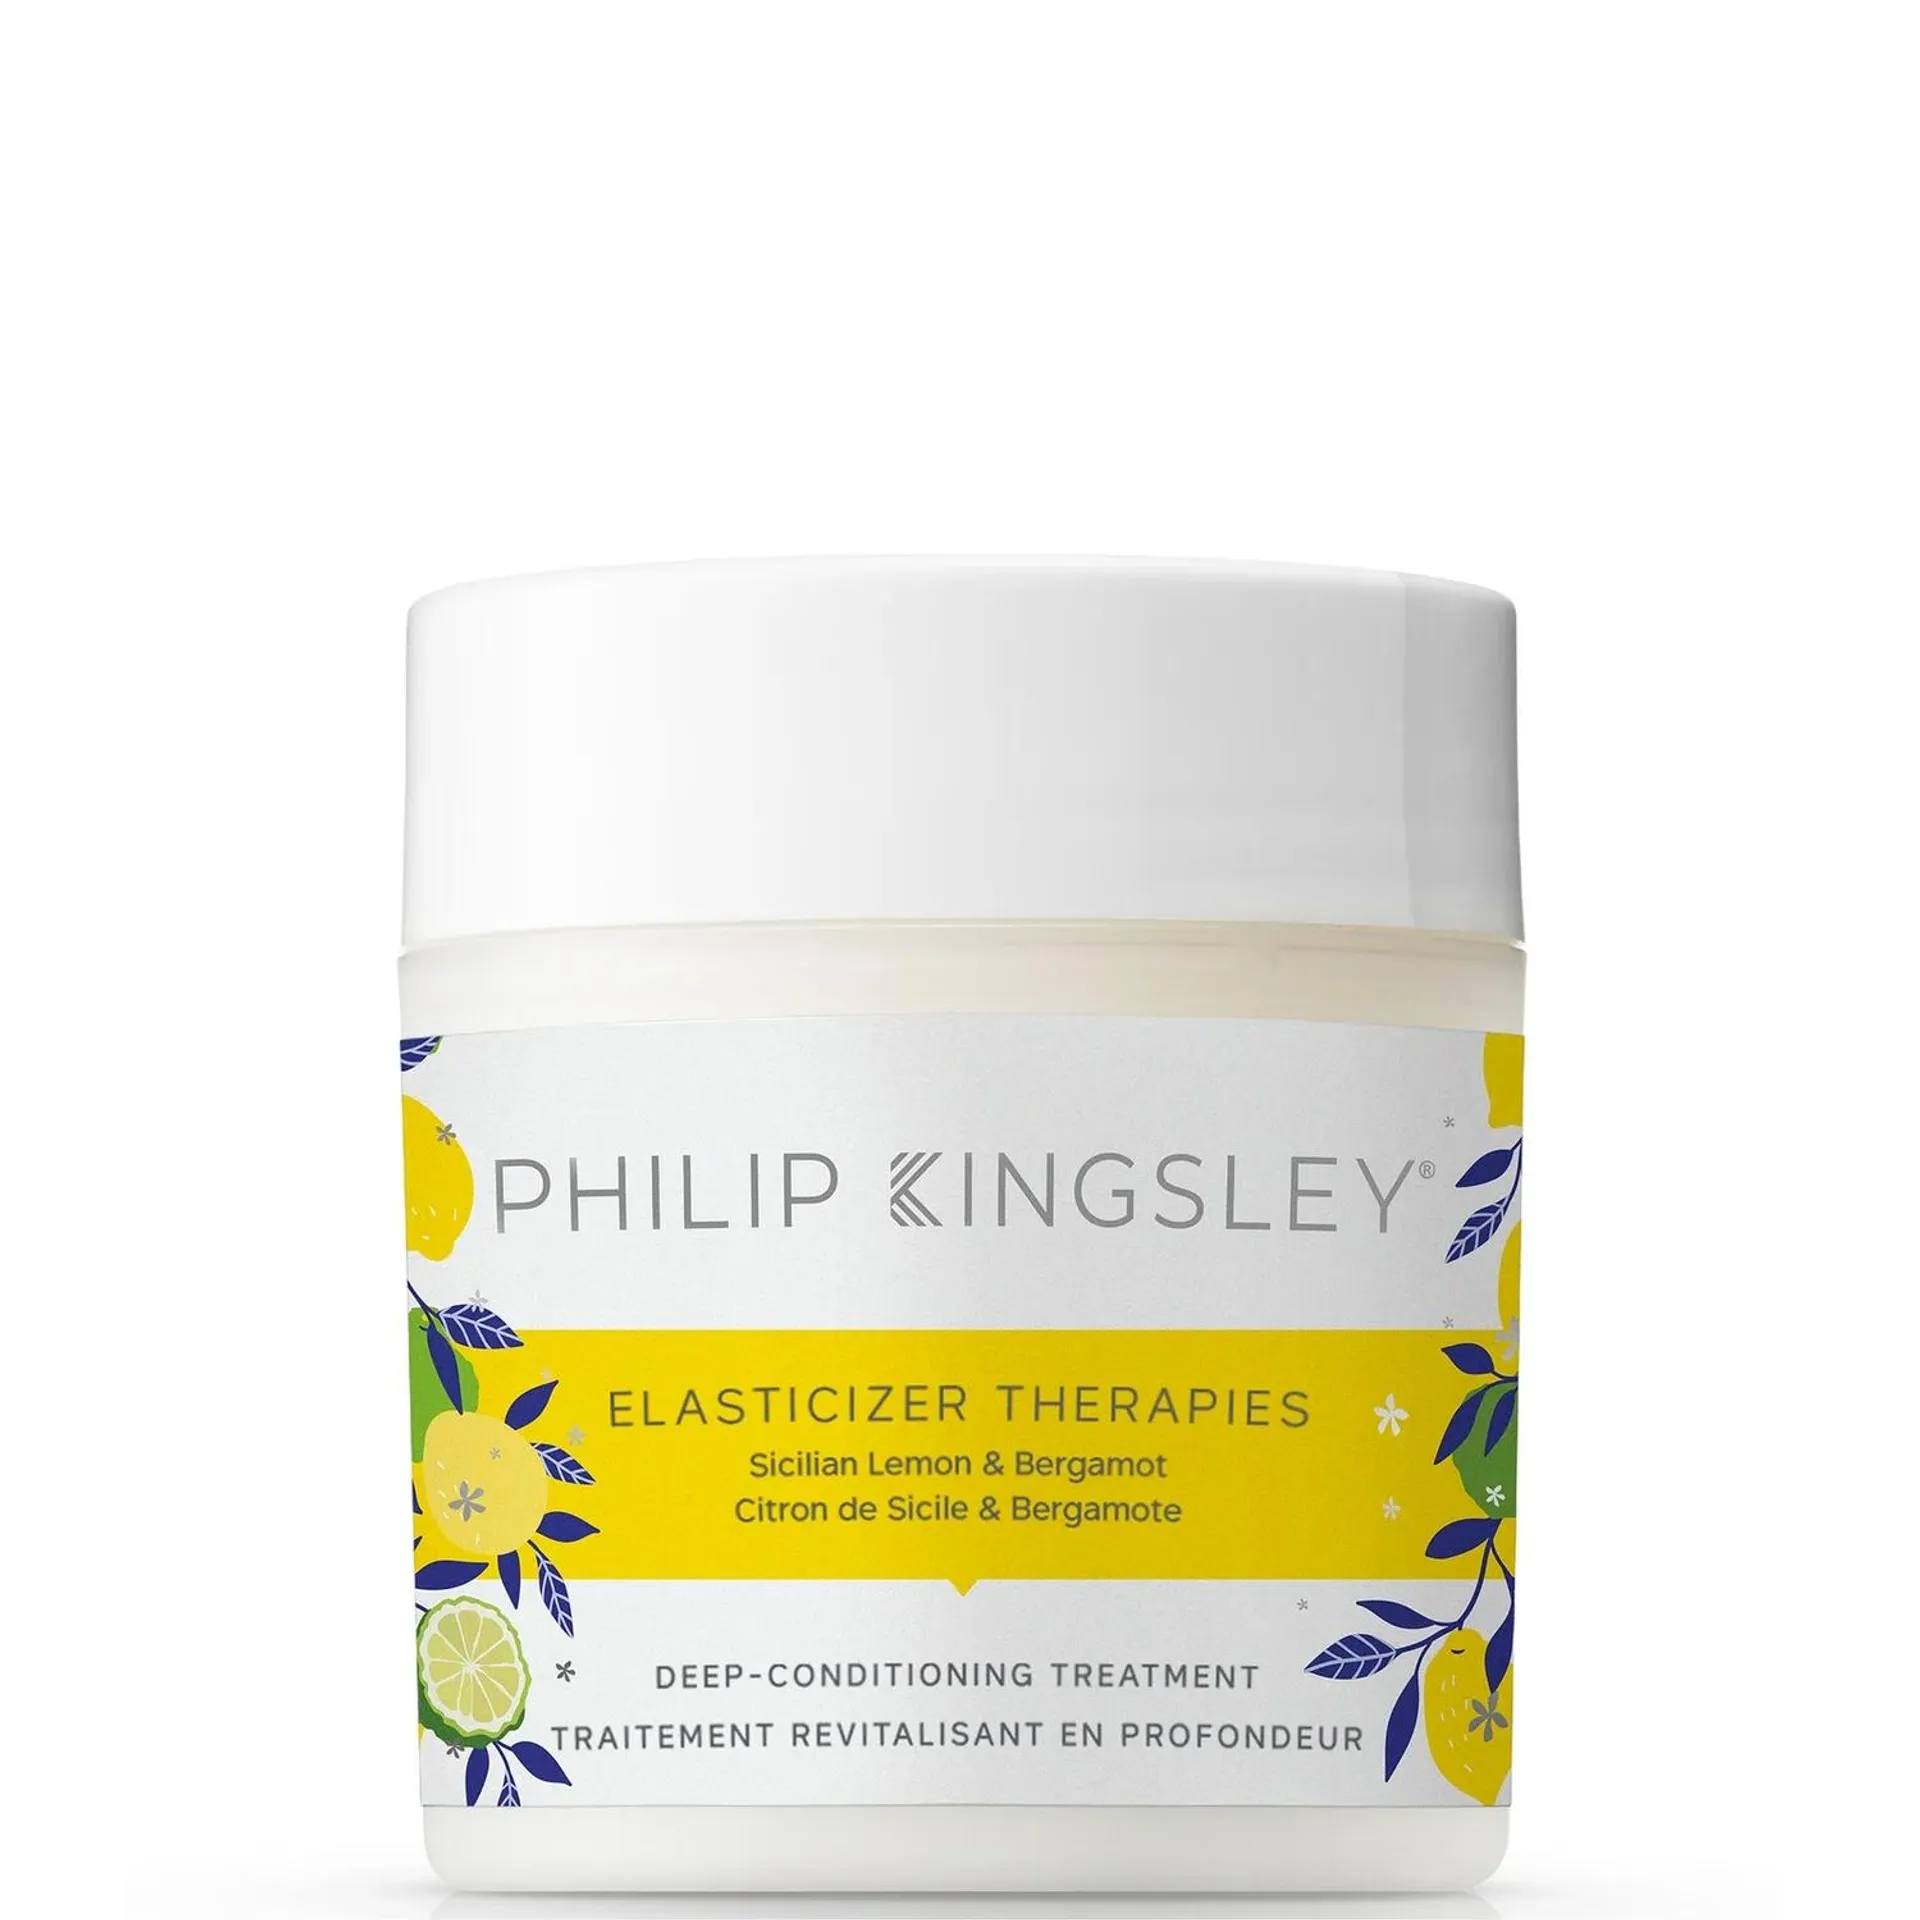 Philip Kingsley Elasticizer Therapies Sicilian Lemon and Bergamot Elasticizer 150ml